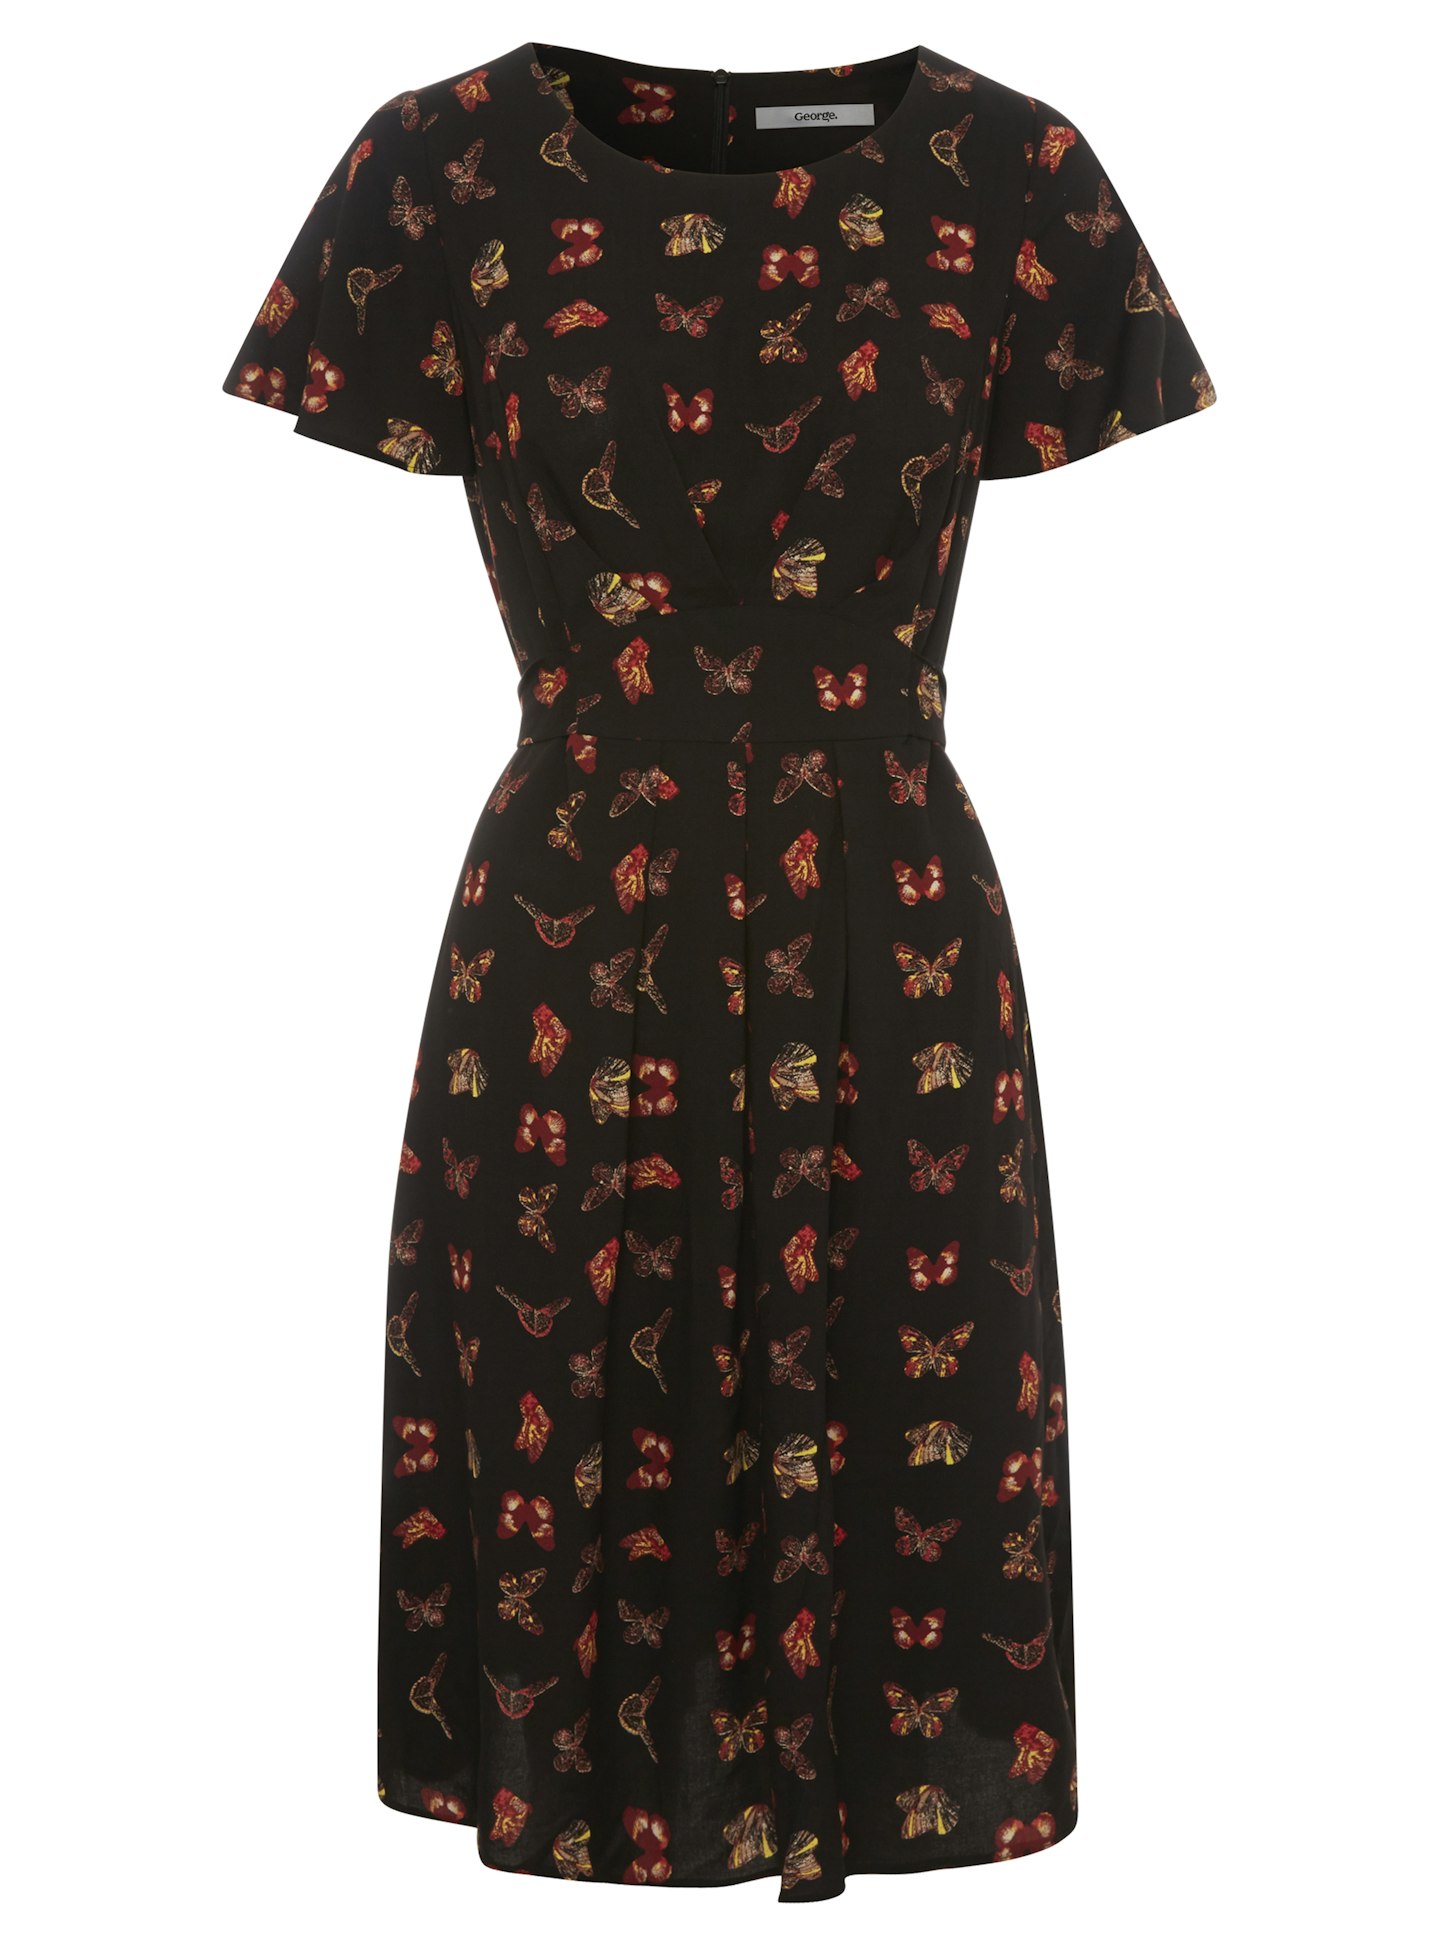 Butterfly print dress £14